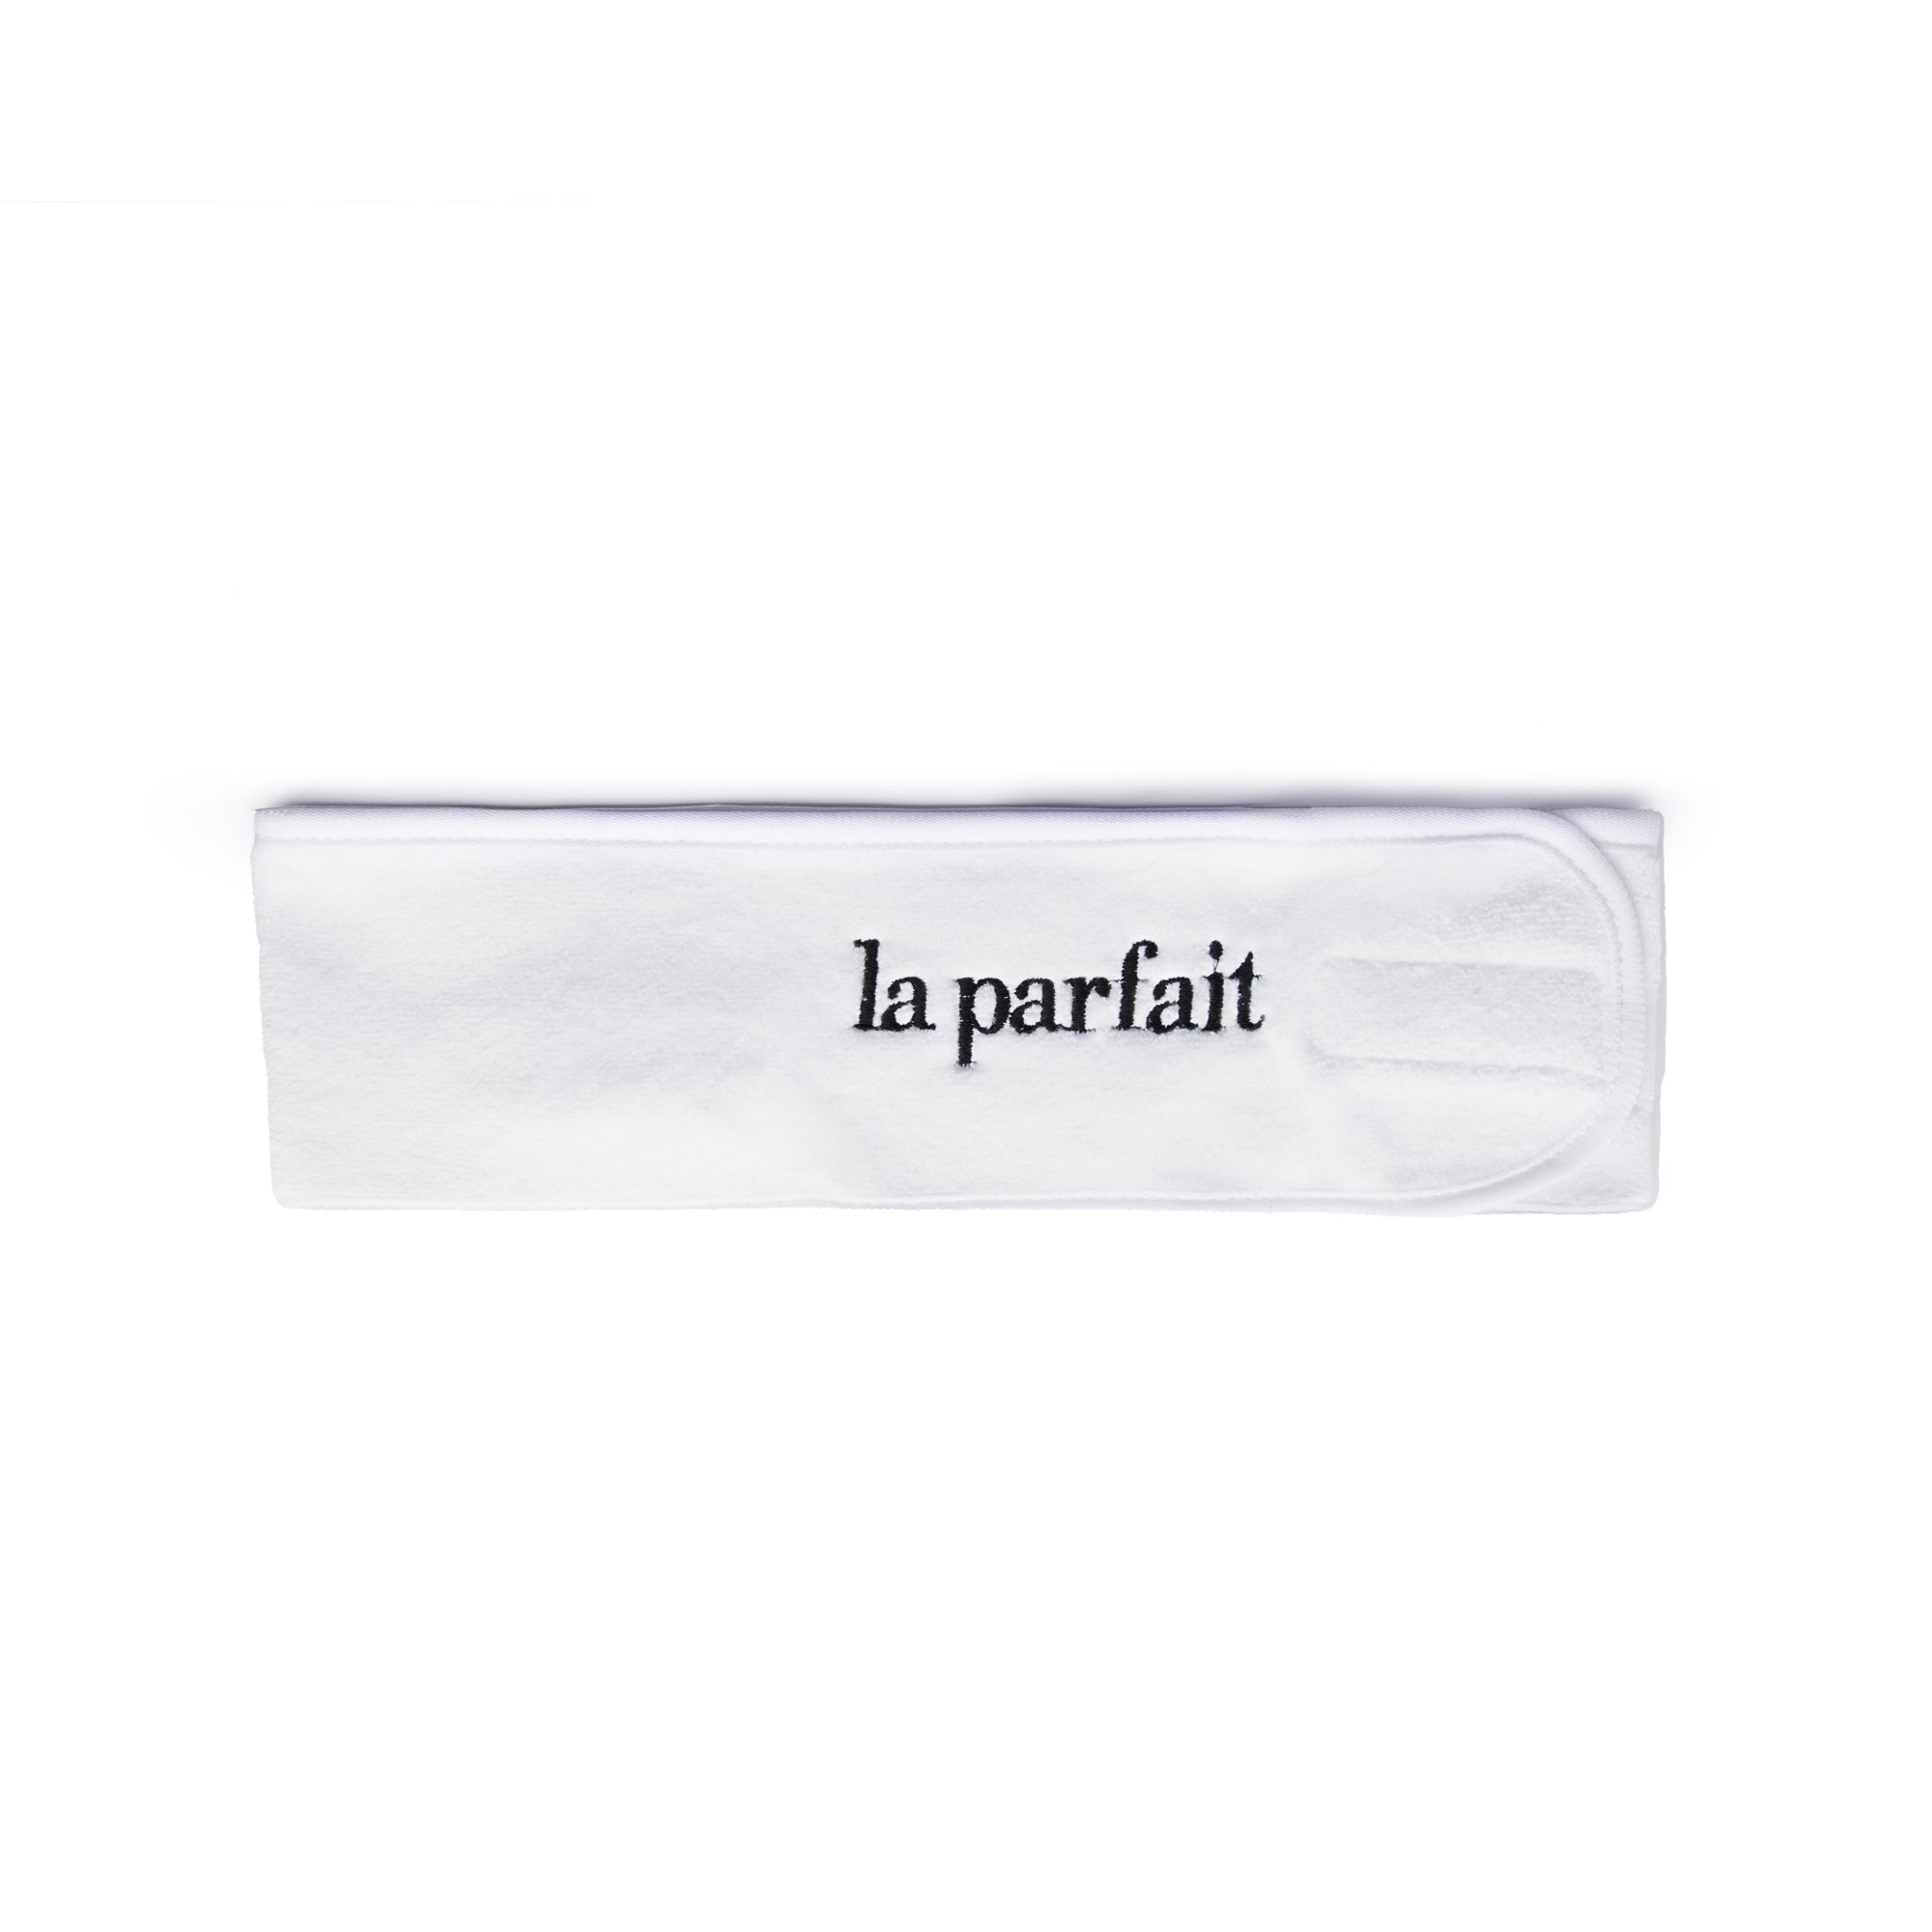 LA PARFAIT HEADBAND – La Parfait Cosmetics